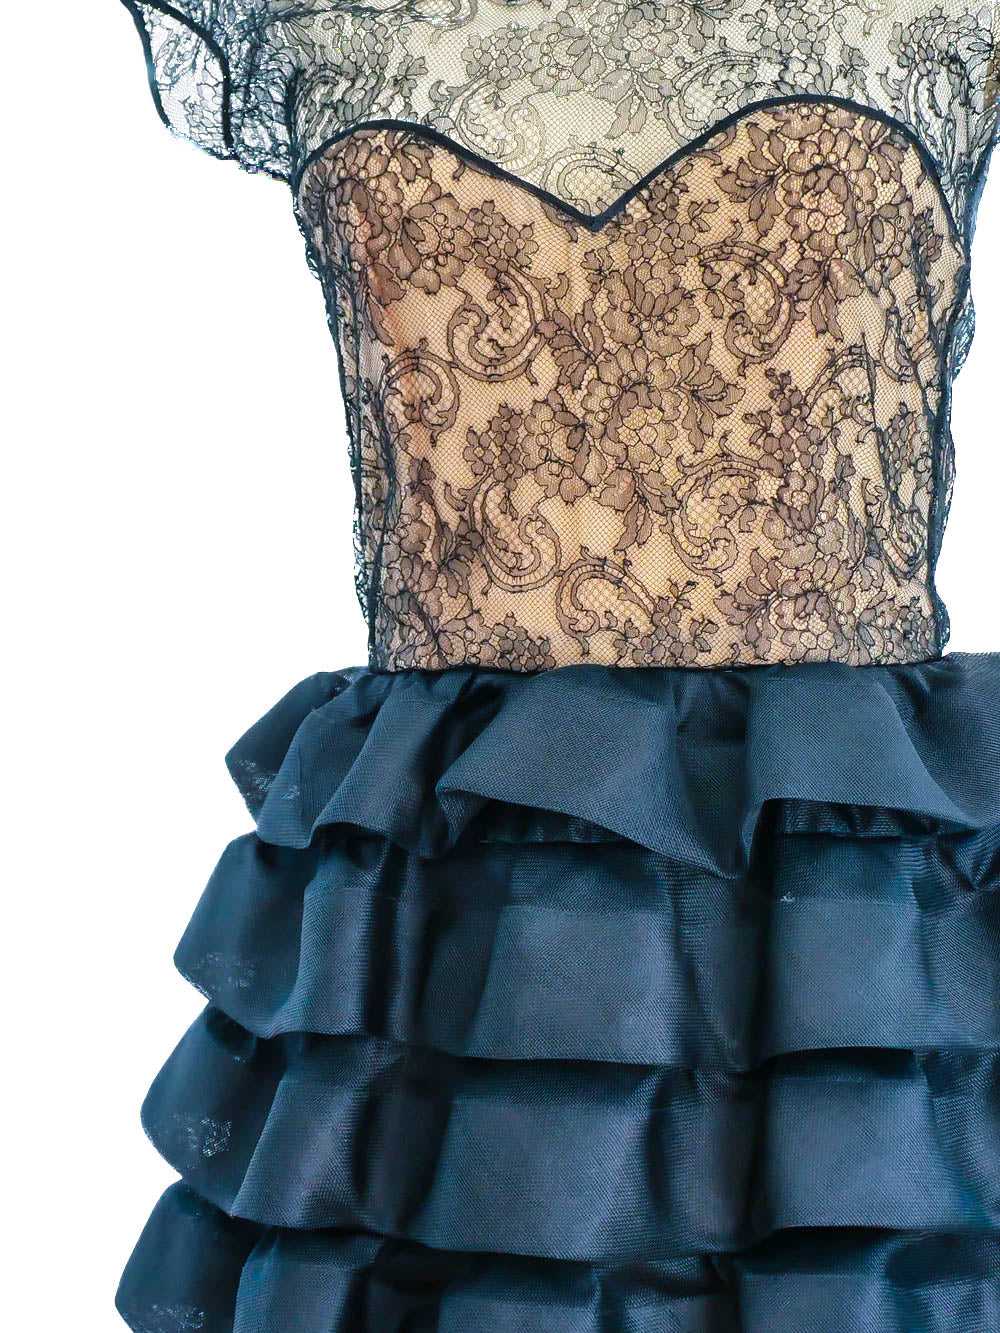 Oscar de la Renta Ruffle Lace Dress - image 4